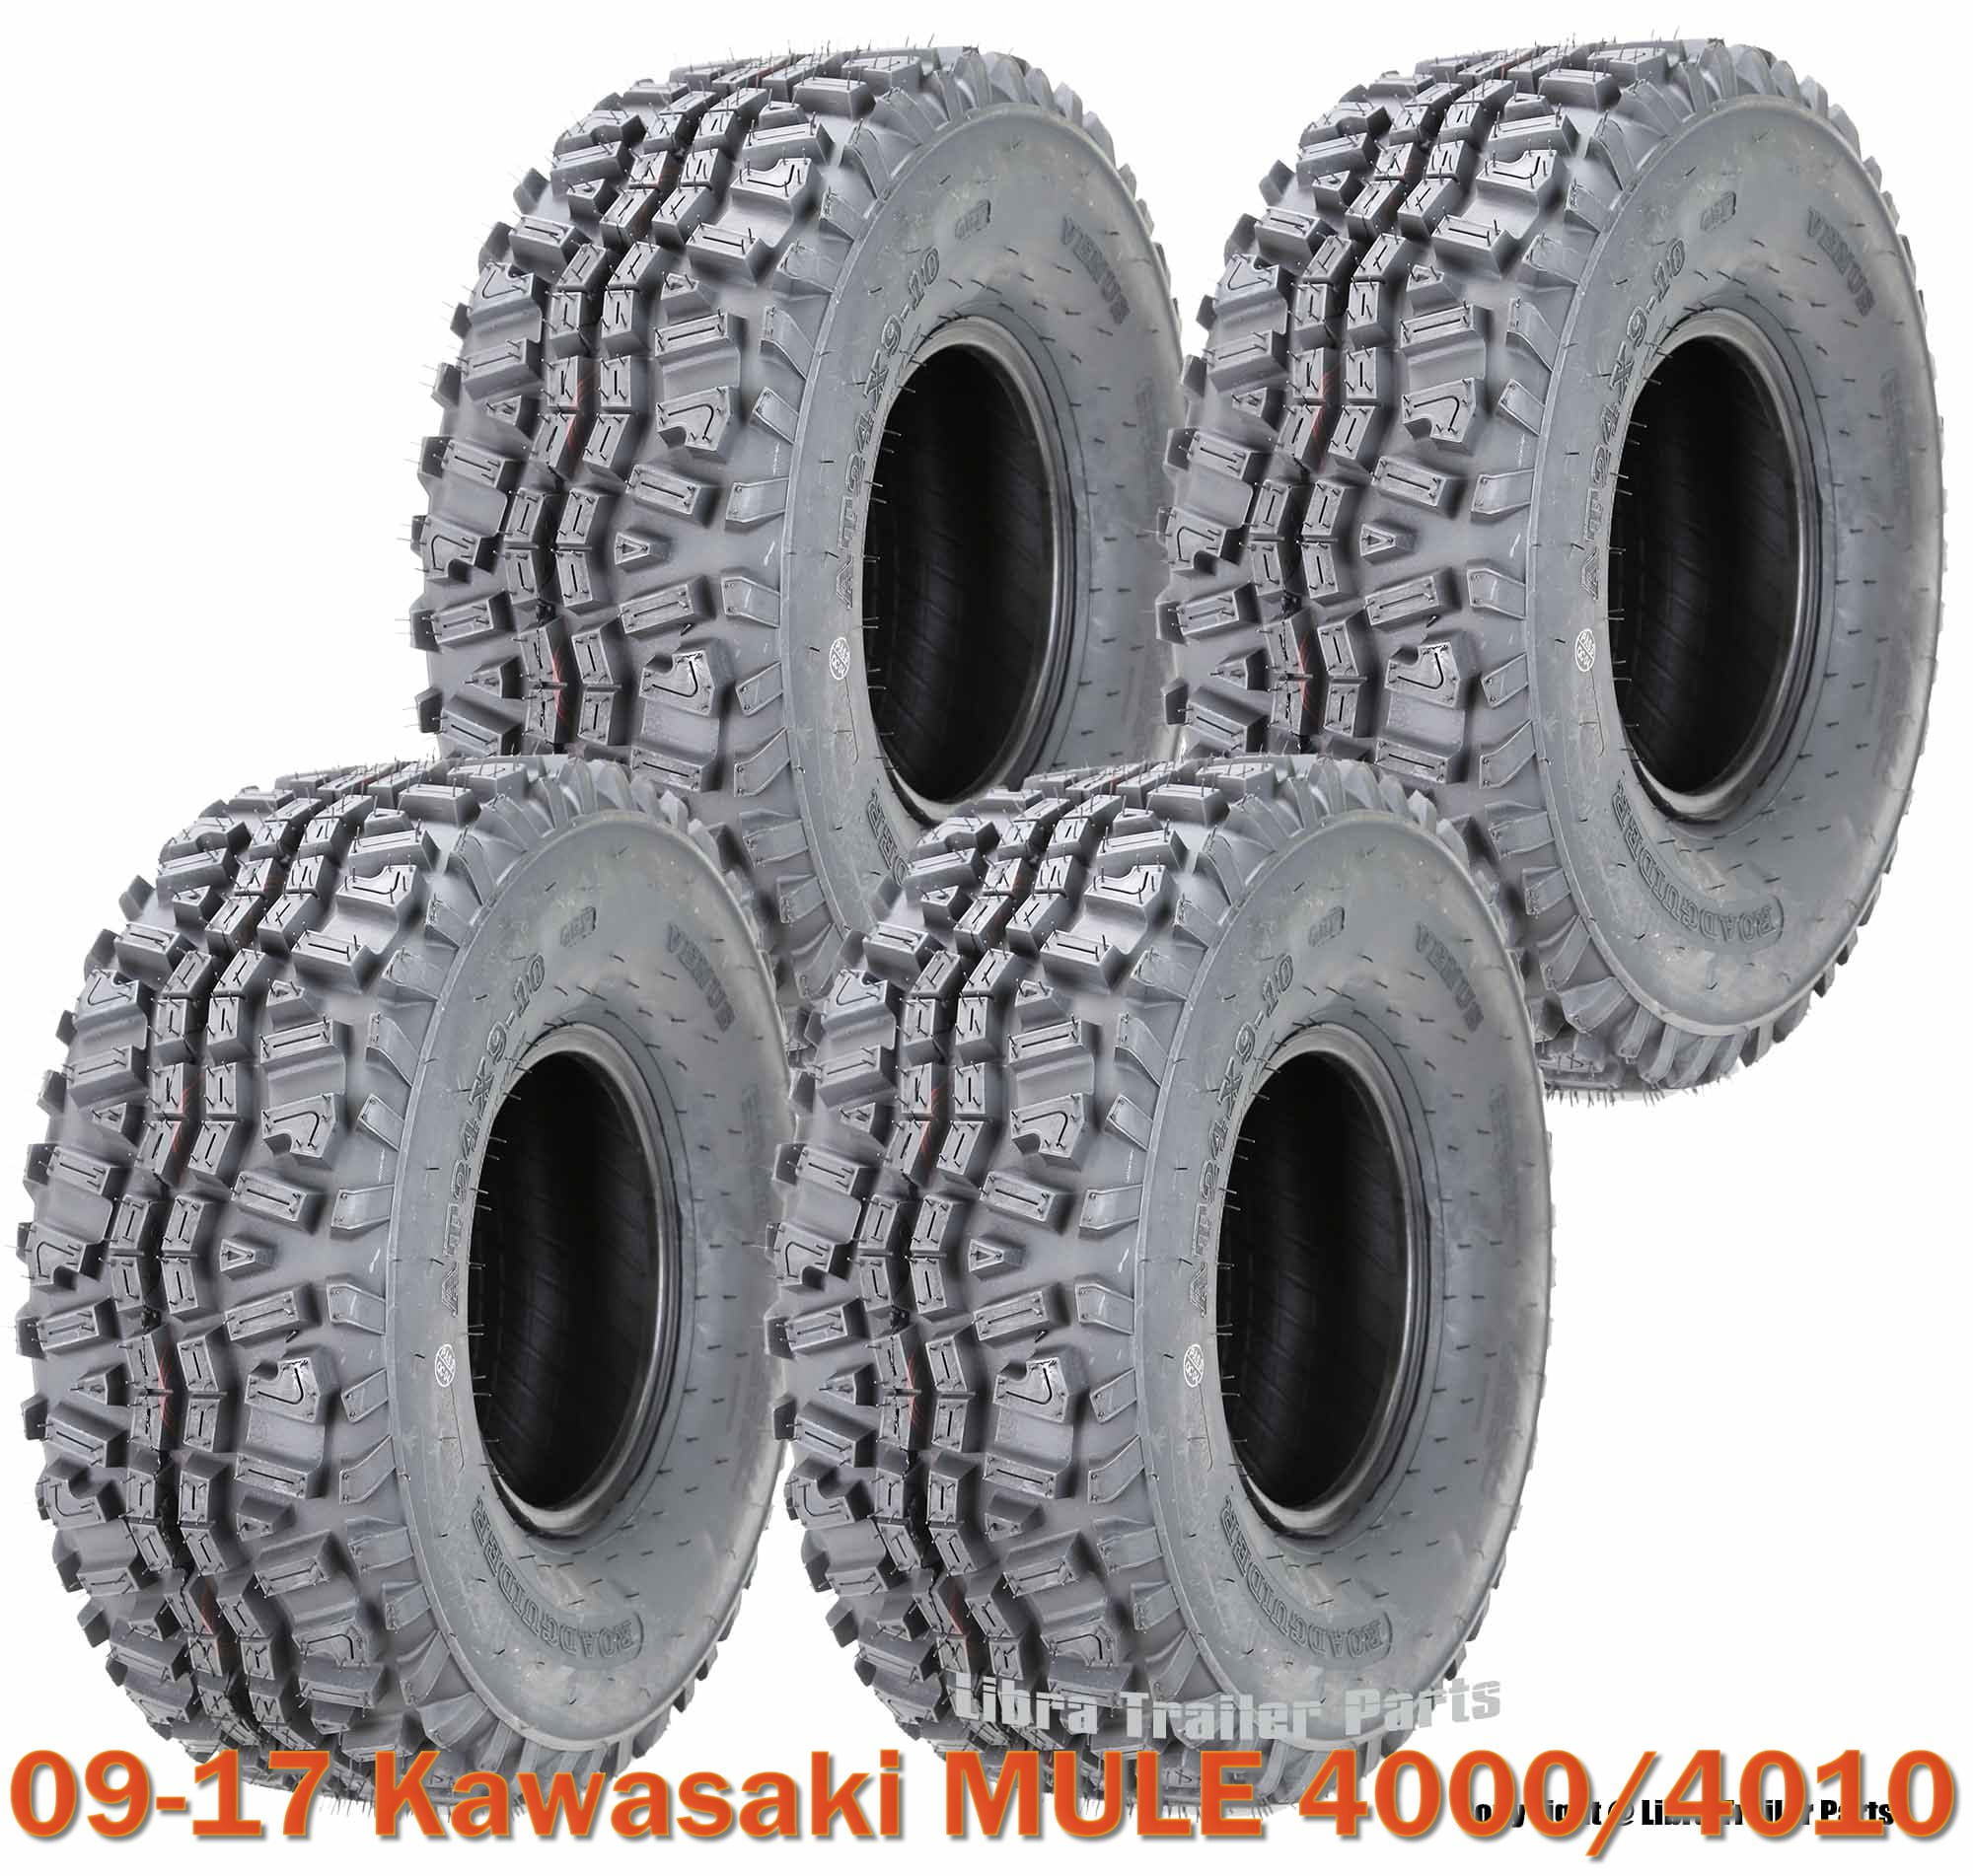 Full Set Utility ATV UTV tires 23x11-10 for 09-17 Kawasaki MULE 4000/4010 